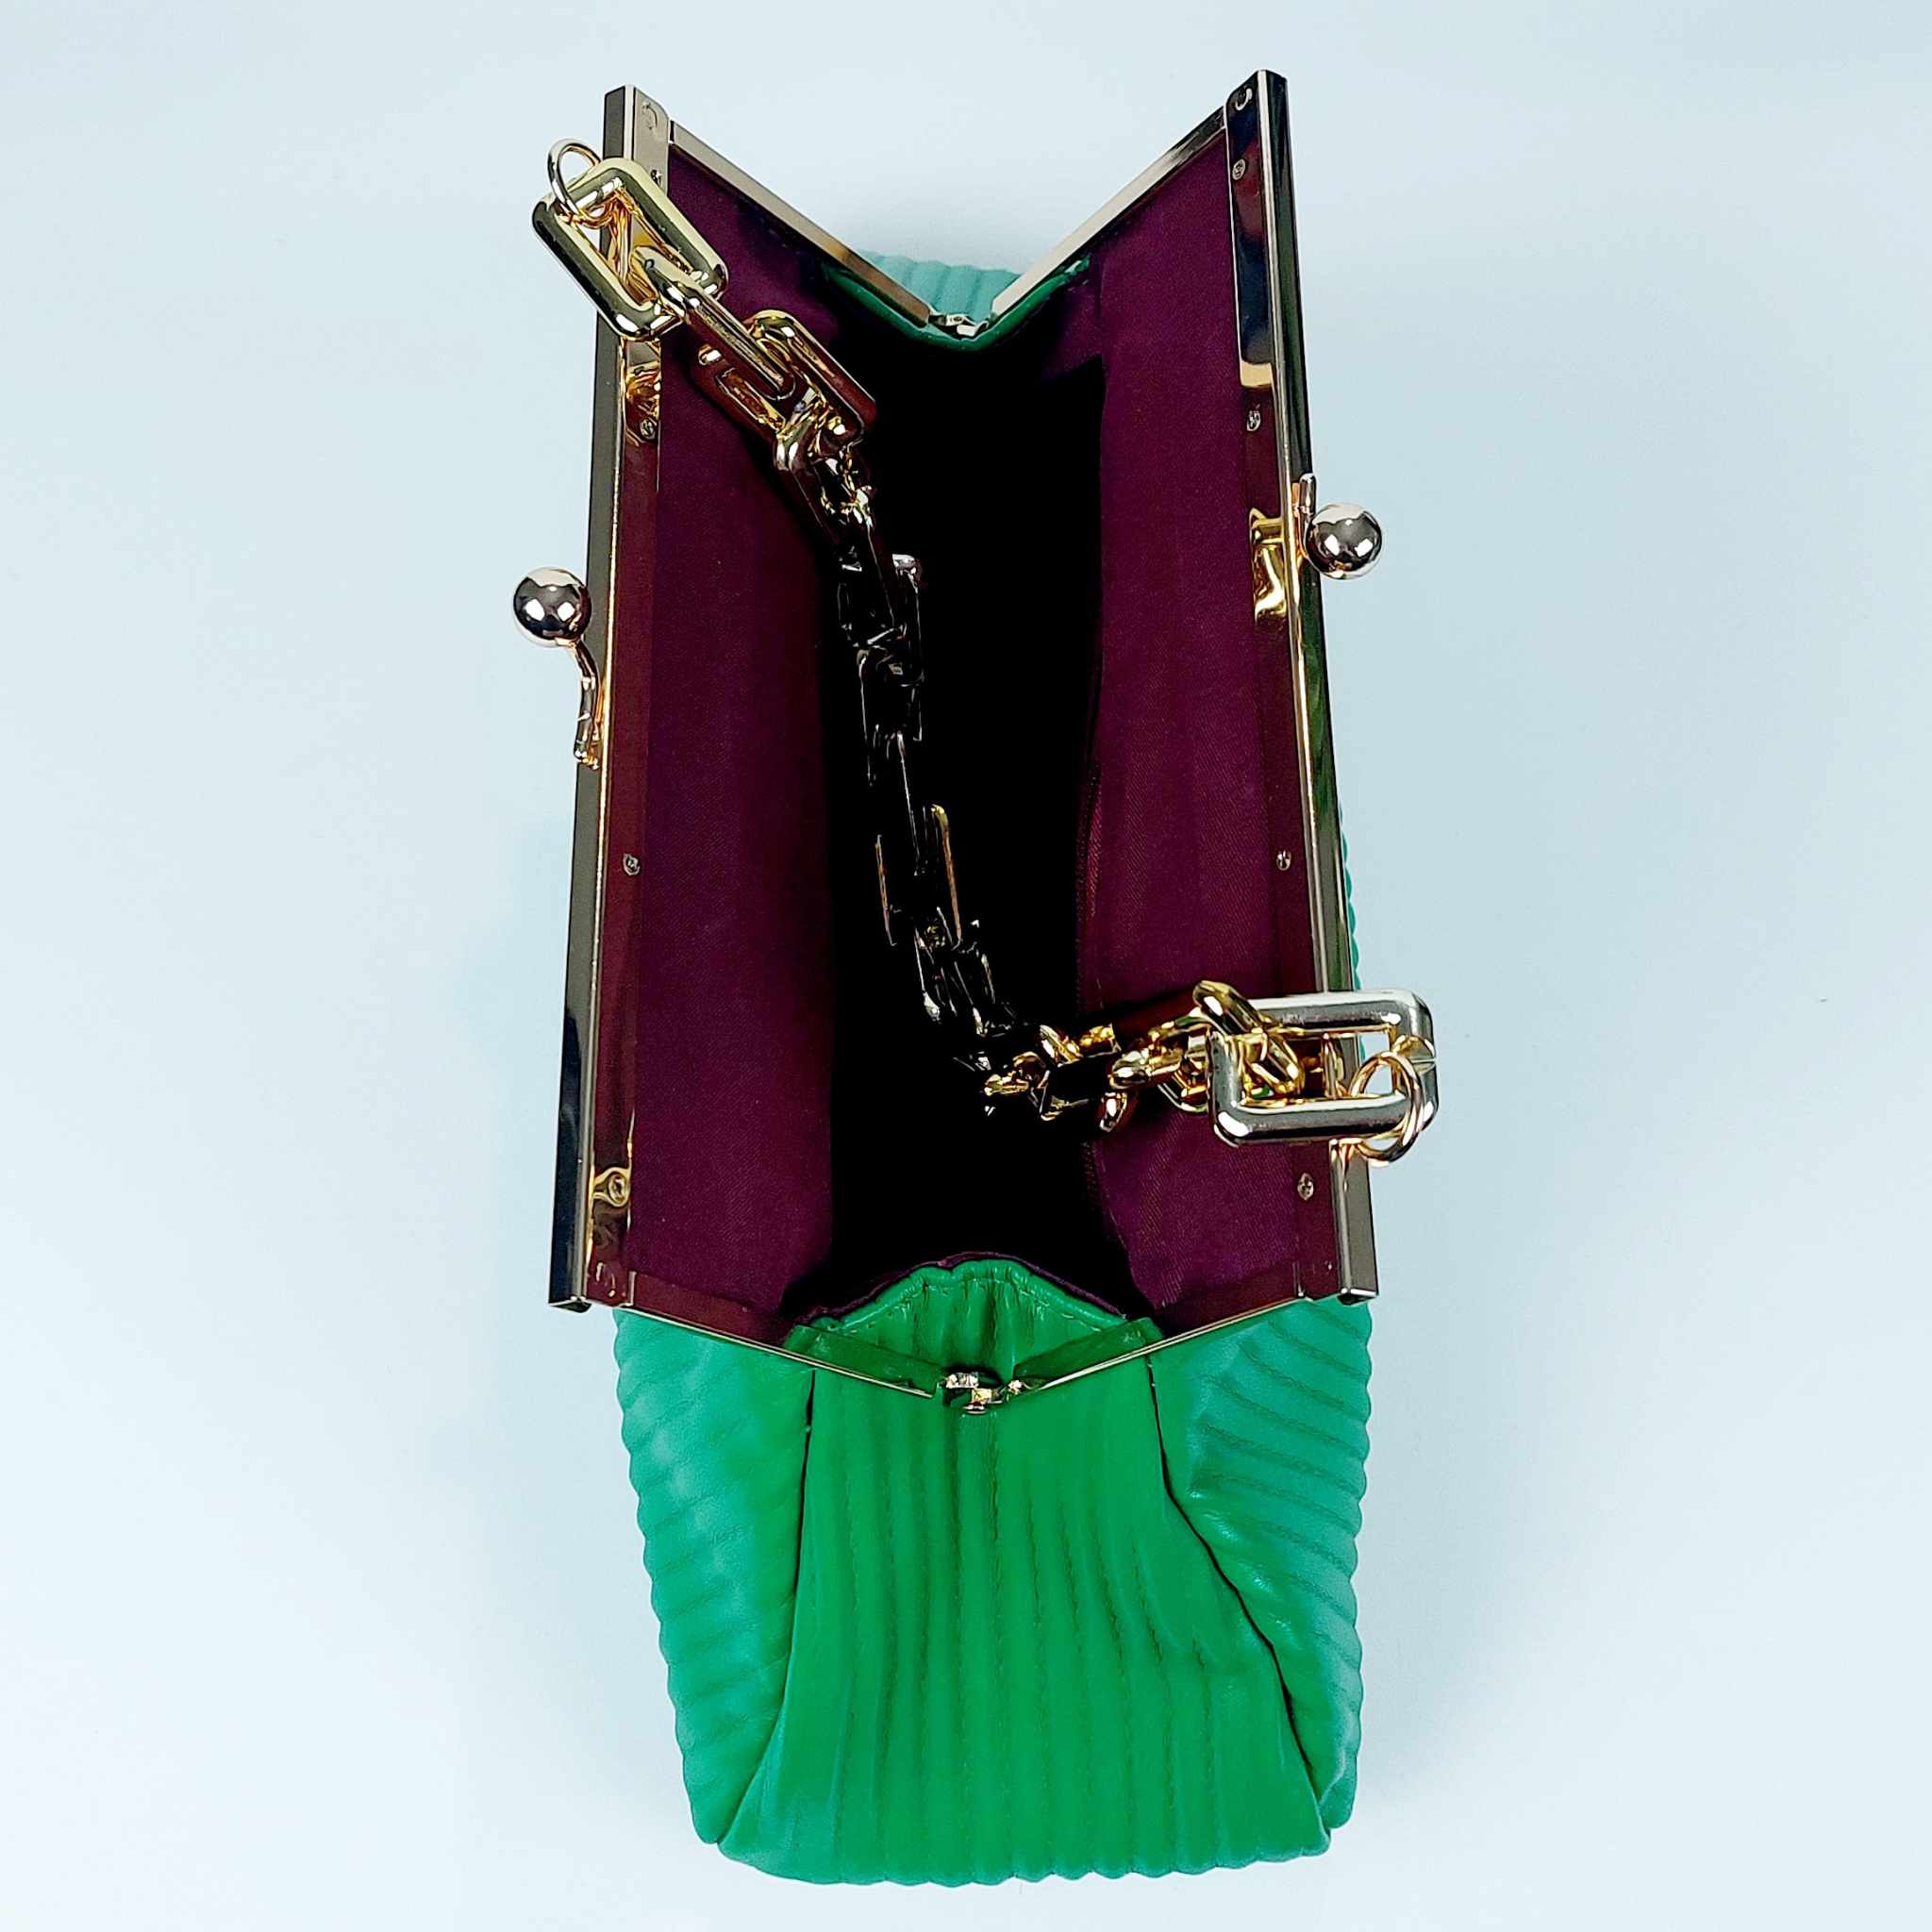 clutch-handbag-divalicious-zayla-green